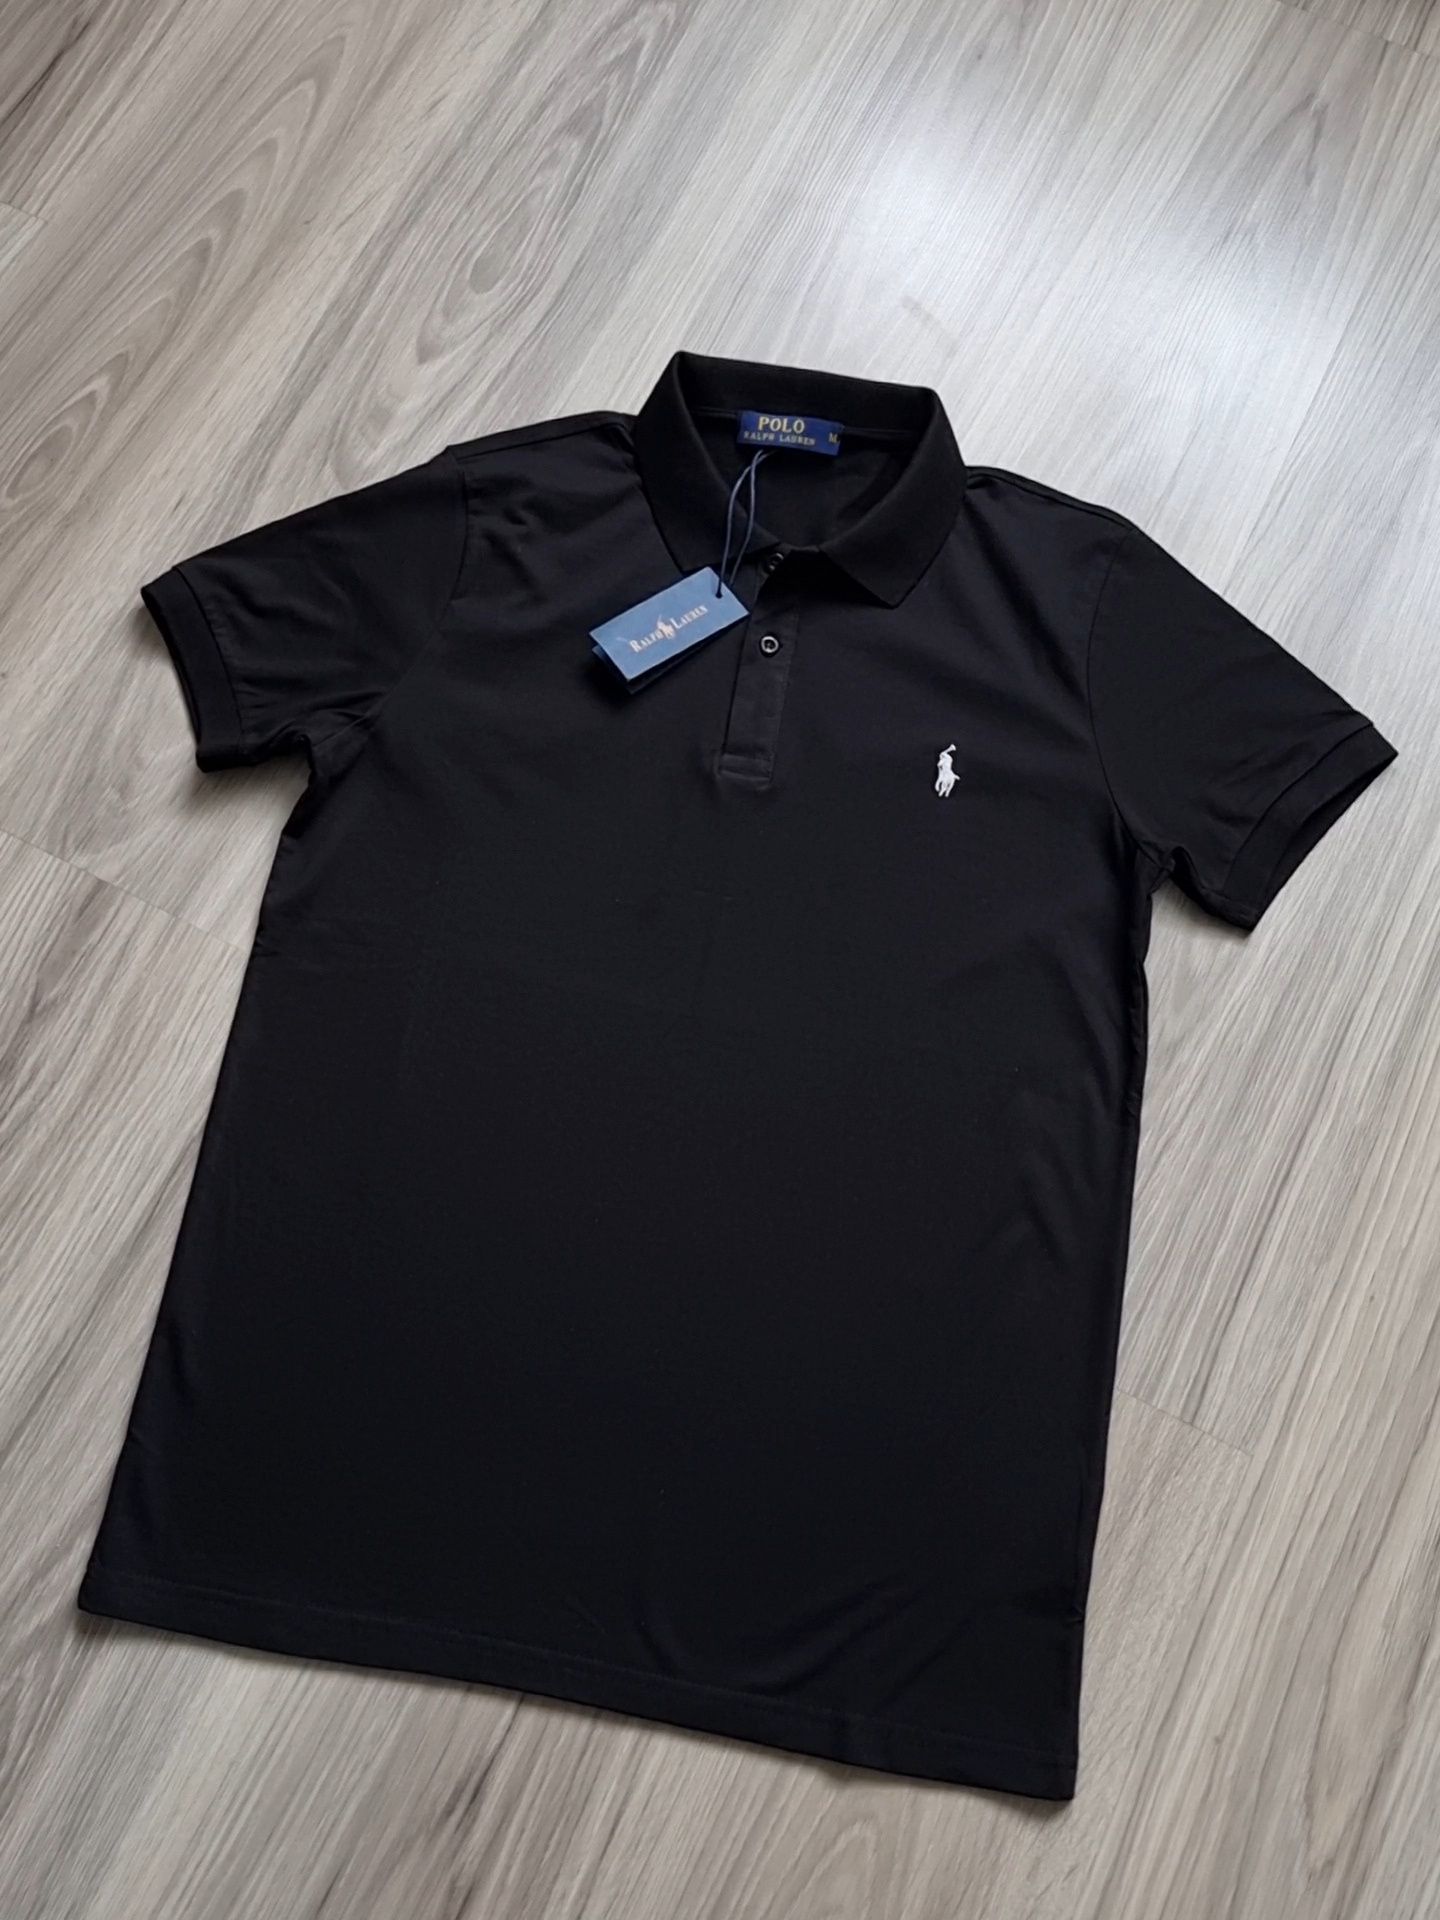 T-shirt/koszulka polo męska czarna Ralph Lauren rozmiar XXL - POLECAM!